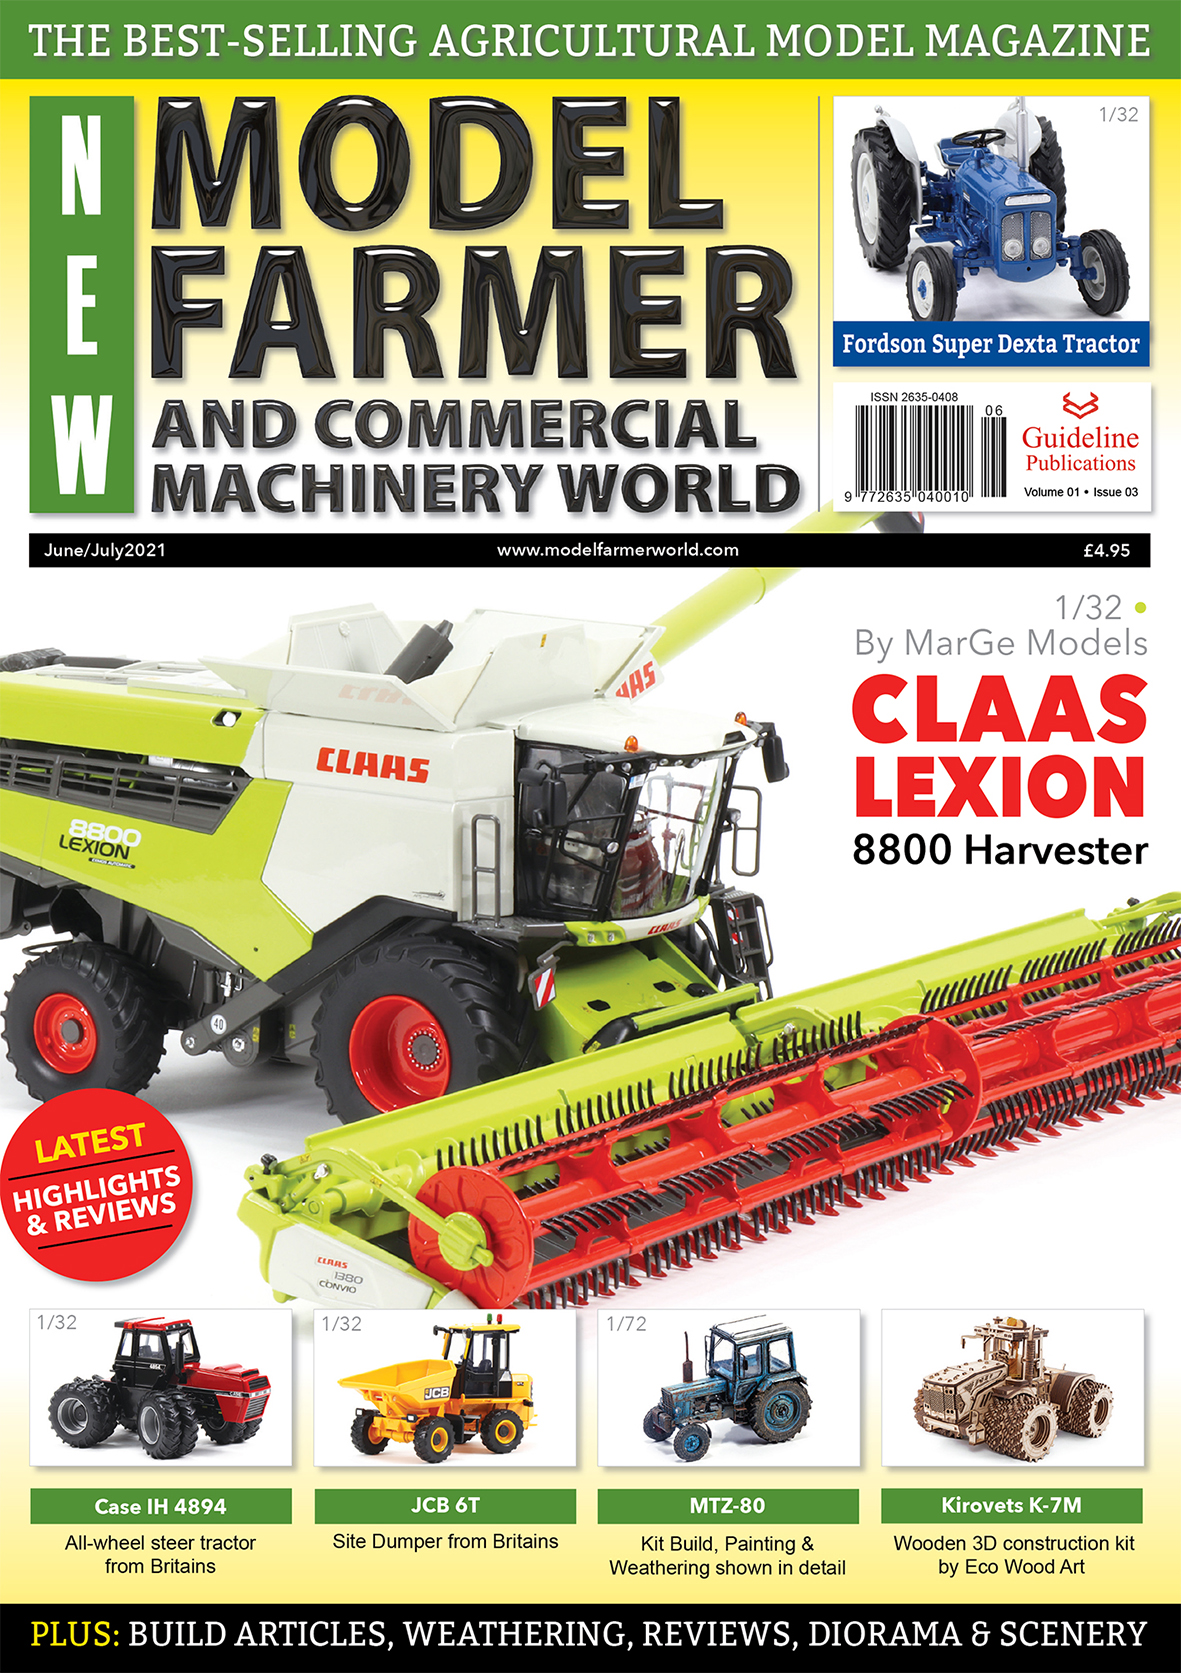 Guideline Publications New Model Farmer  -  Vol 01 - Issue 03  June/July 21 Editor Steven Downes 